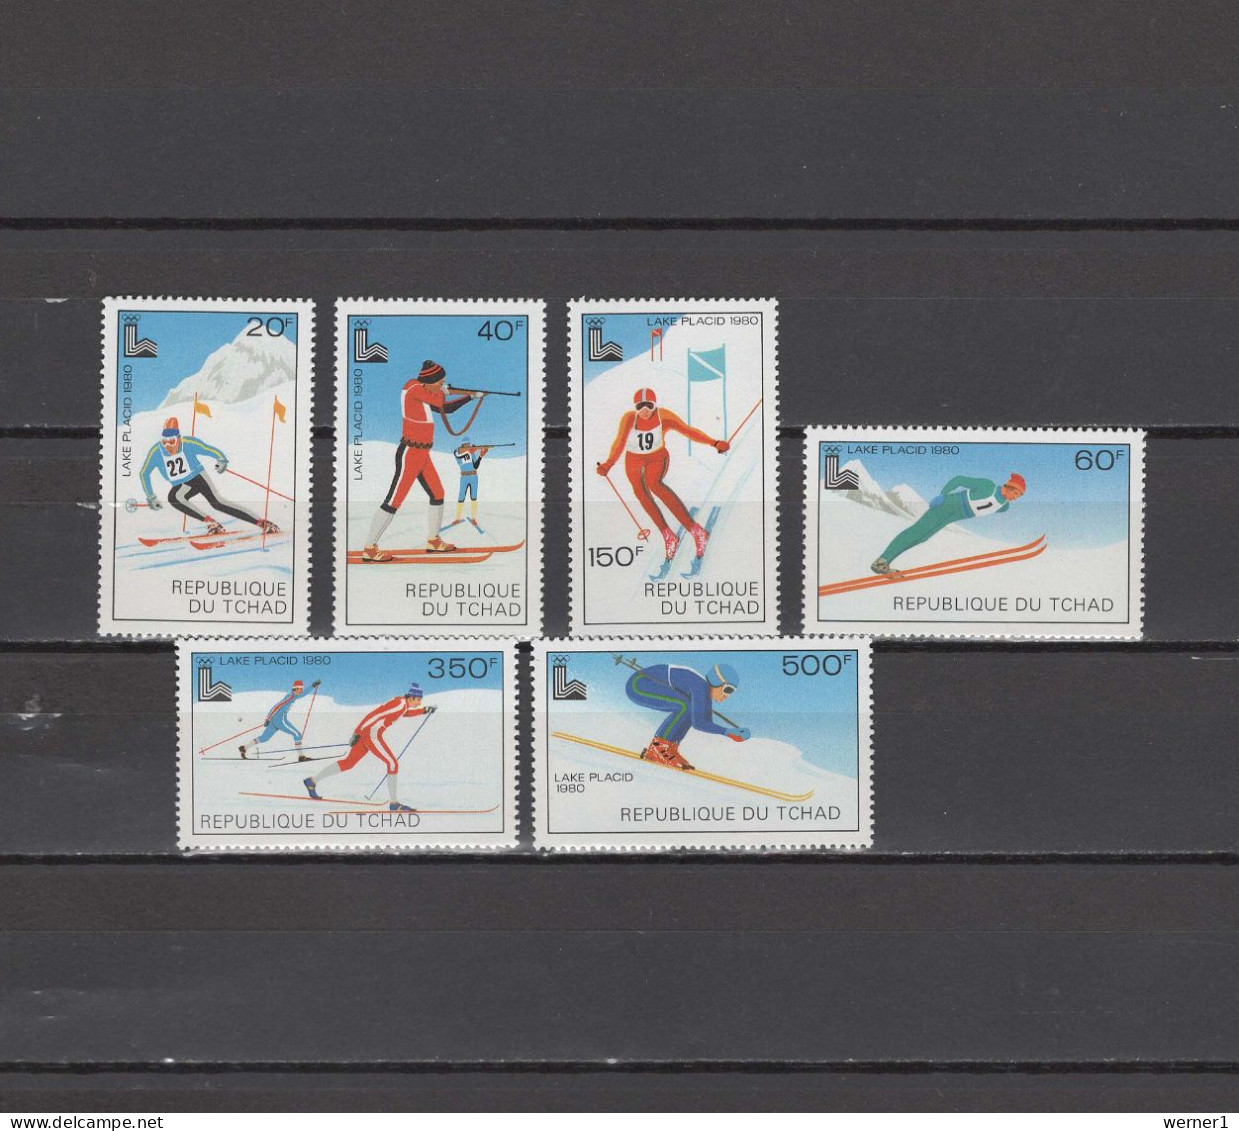 Chad - Tchad 1979 Olympic Games Lake Placid Set Of 6 MNH - Hiver 1980: Lake Placid